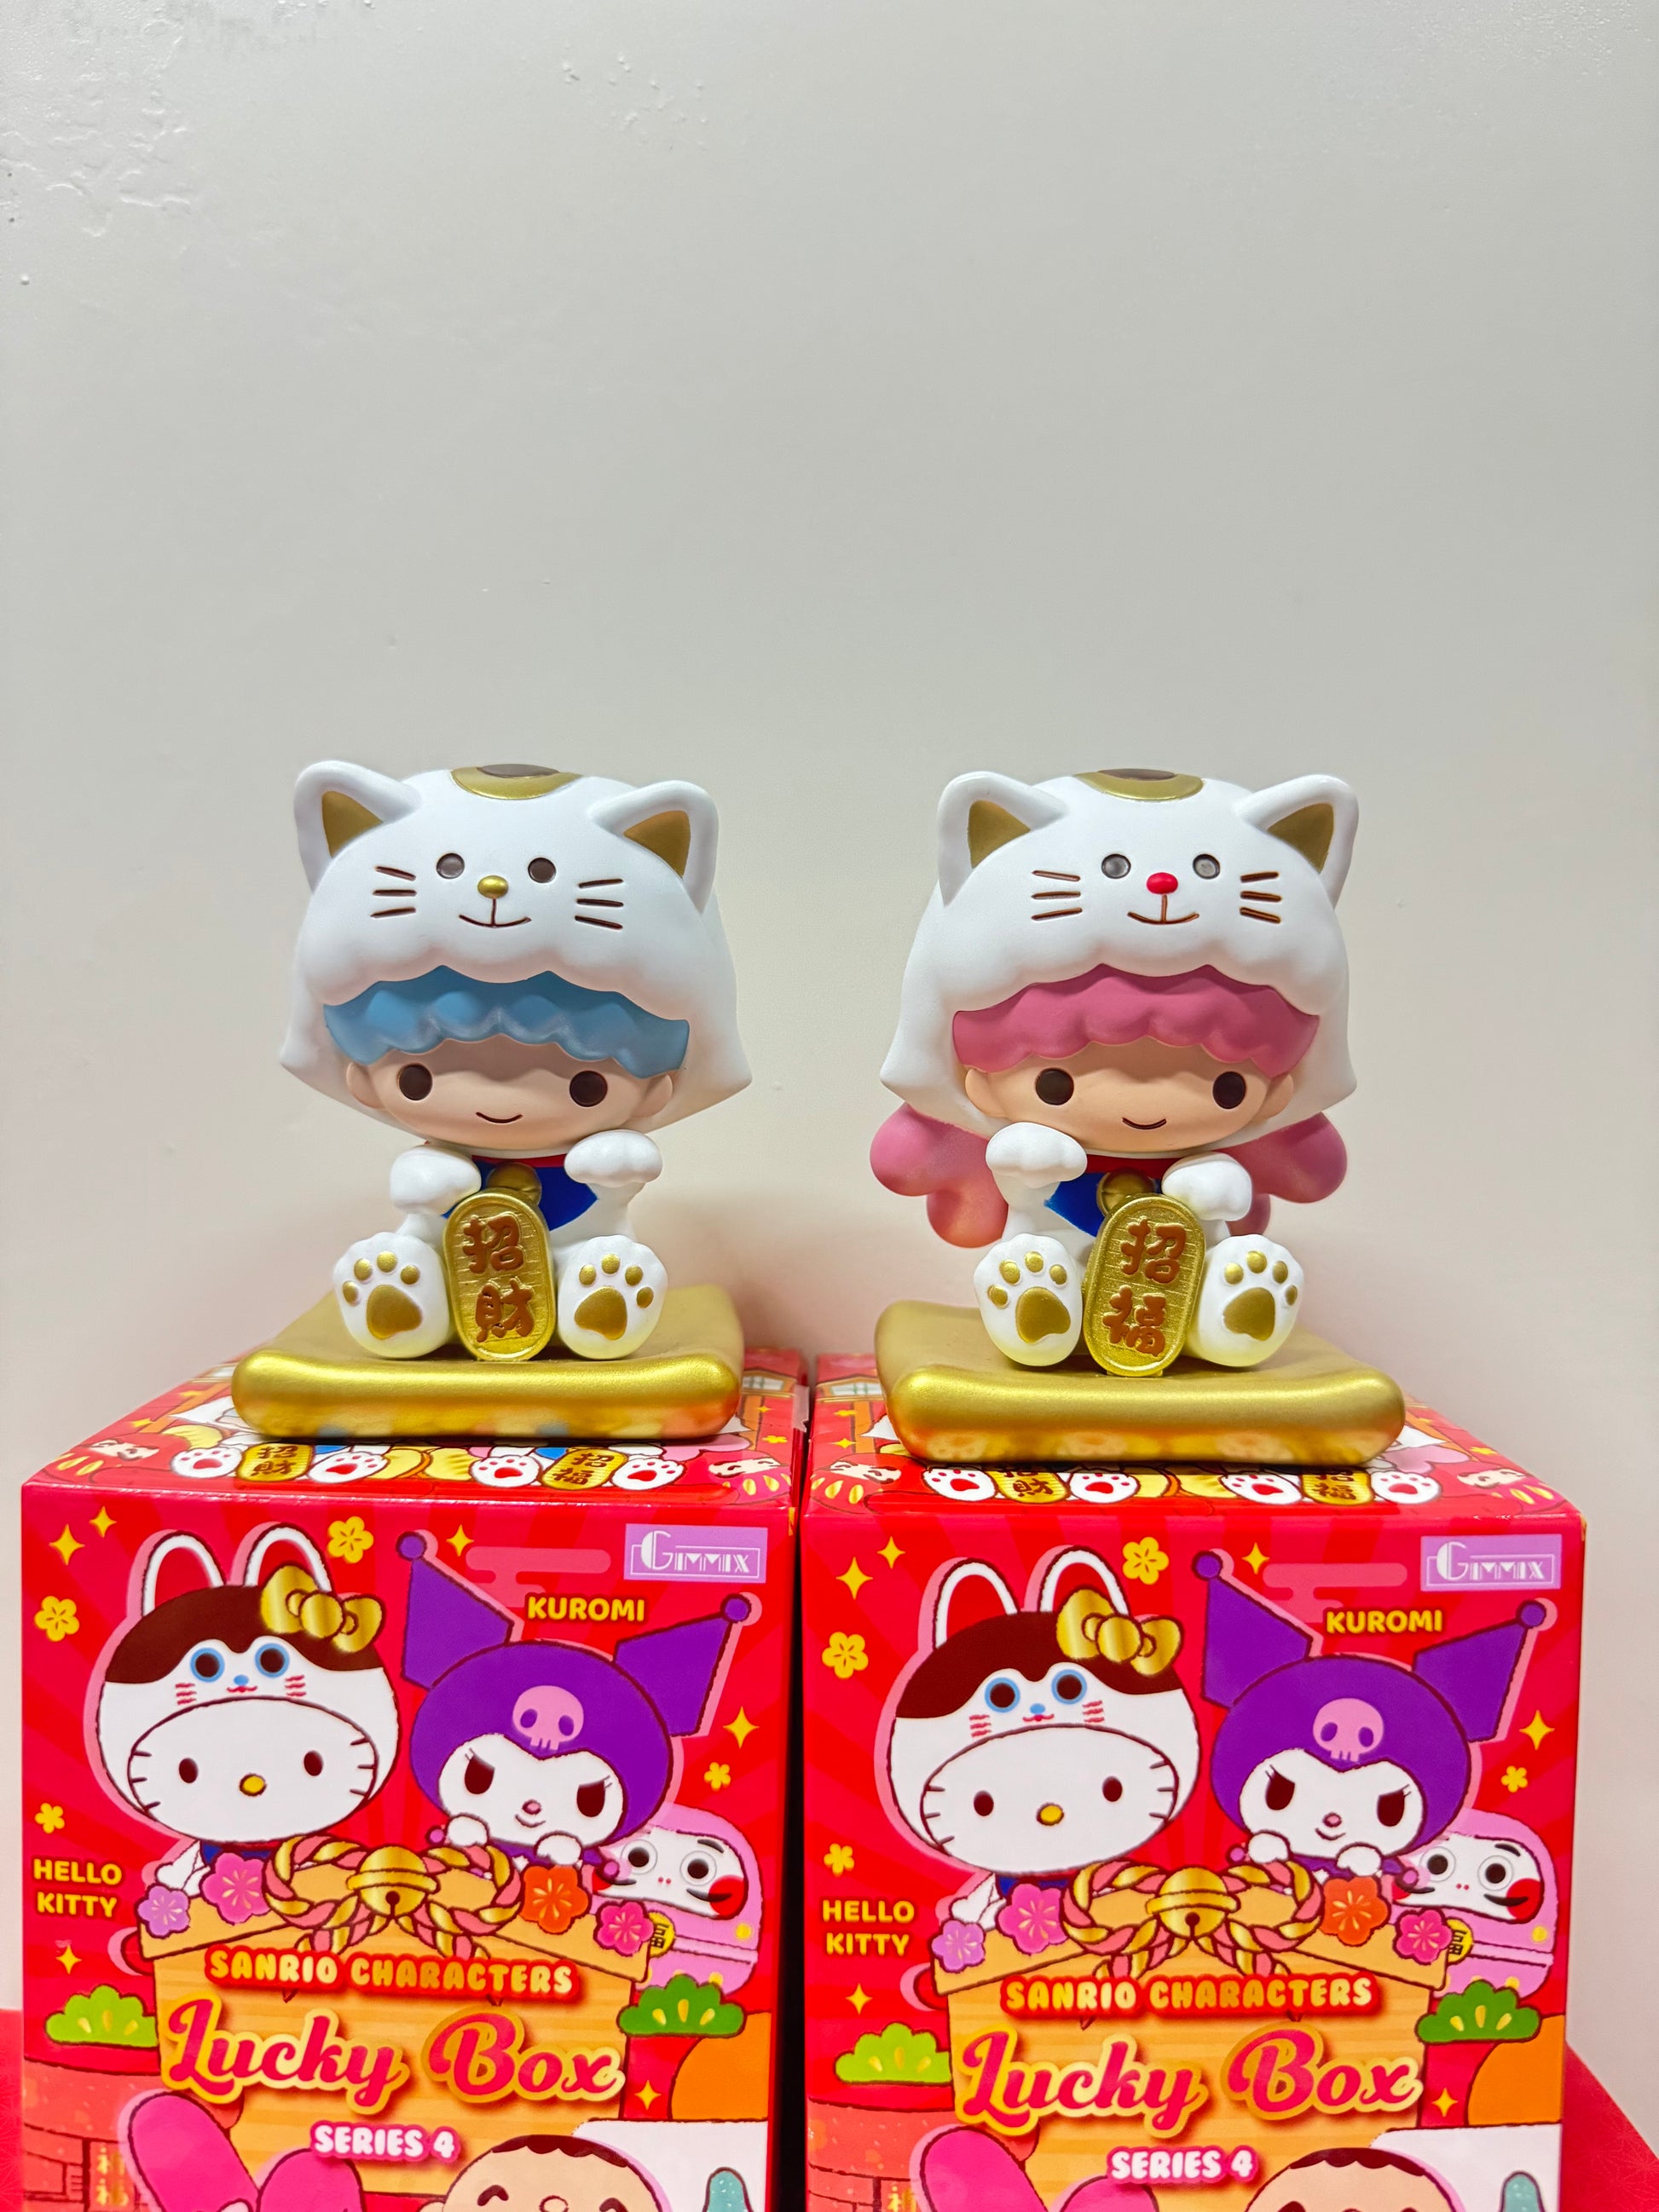 Mystery Blind Box Sanrio Characters Lucky Box | Secret Gold Litte Twin Stars Meneki Lucky Cat - Kawaii Collectable Toys